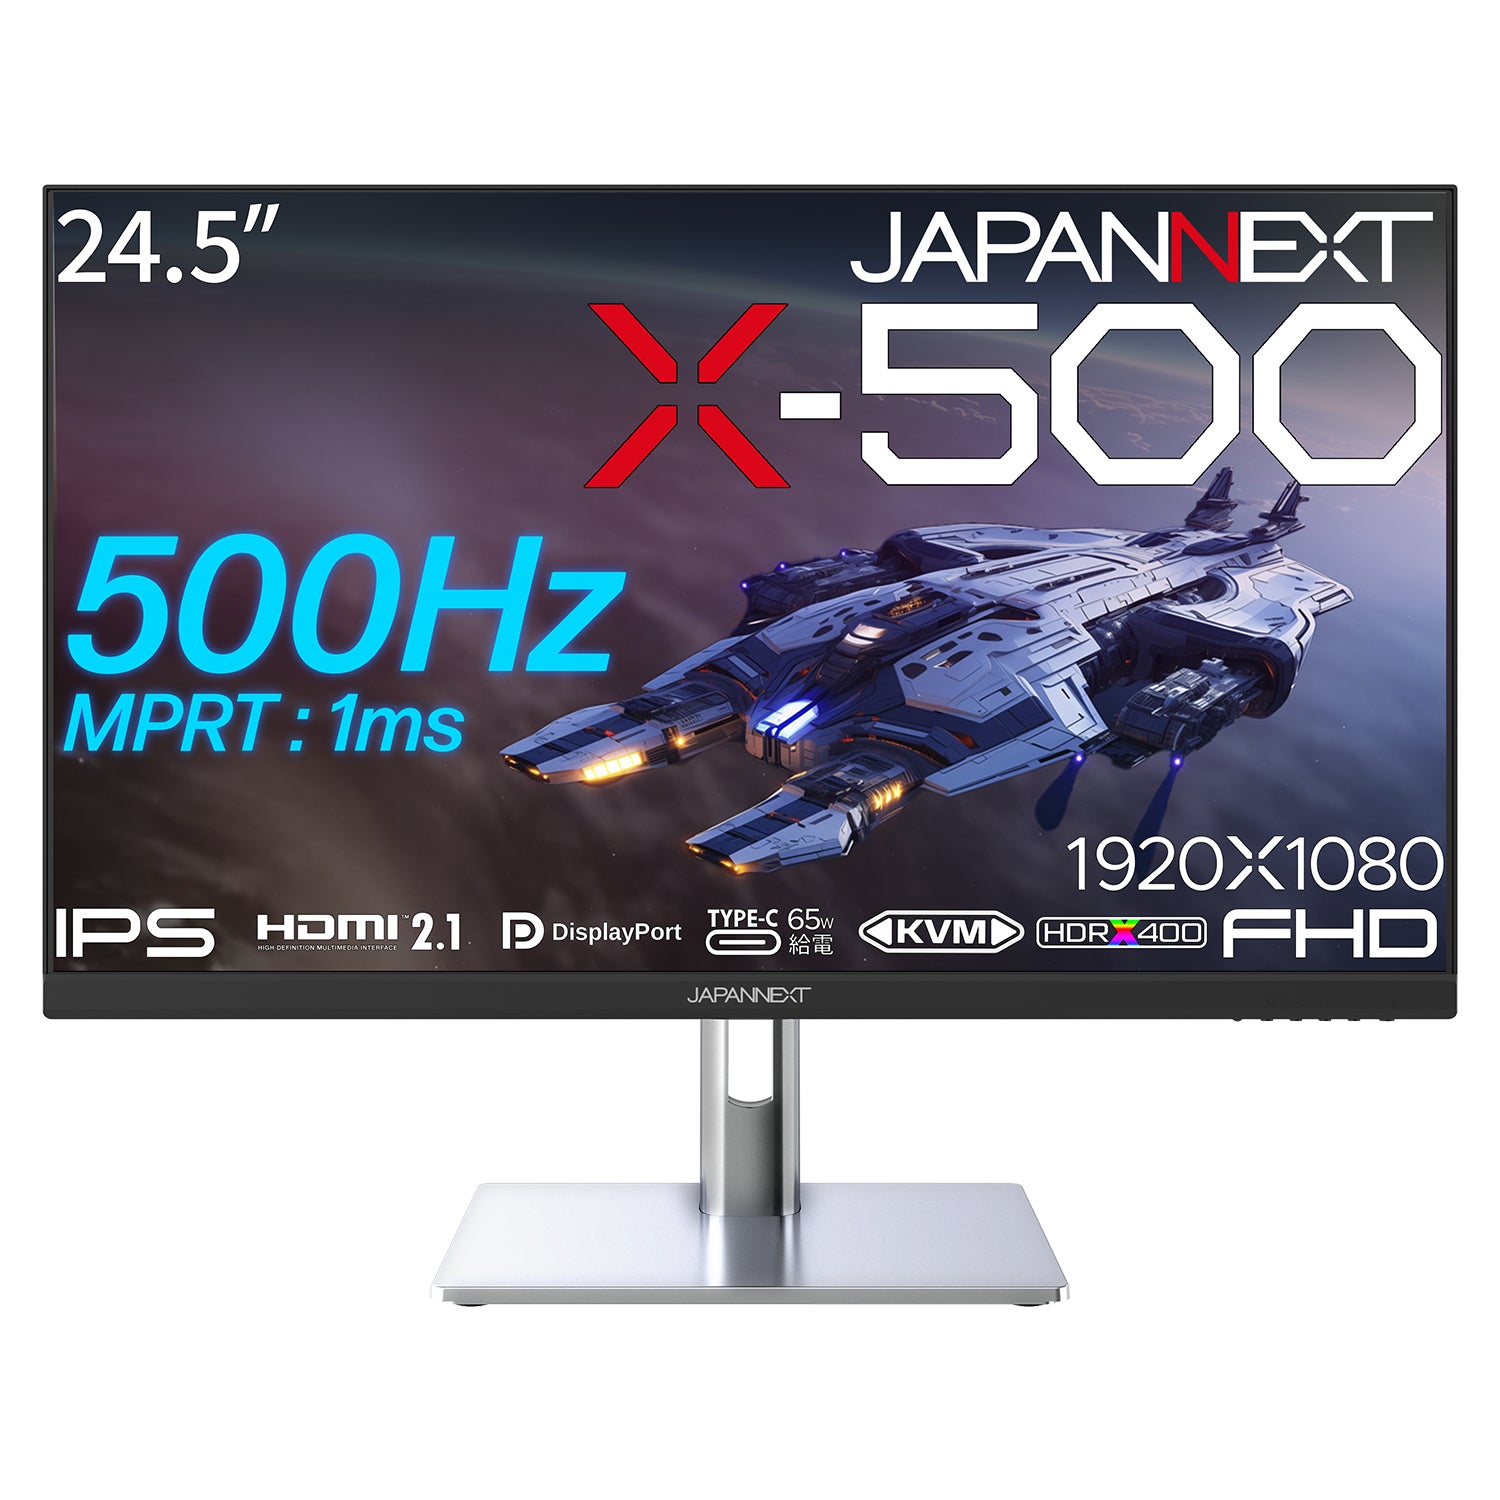 JAPANNEXT 24.5インチ IPSパネル搭載 500Hz対応 フルHD(1920x1080)解像度 ゲーミングモニター  X-500(JN-IPS24X500FR-H-C6) HDMI2.1 DP USB Type-C(最大65W給電) 1ms(MPRT)  sRGB:99% HDR400相当 PS5:120Hz接続対応 VRR 高さ調整 ピボット機能 KVM機能搭載